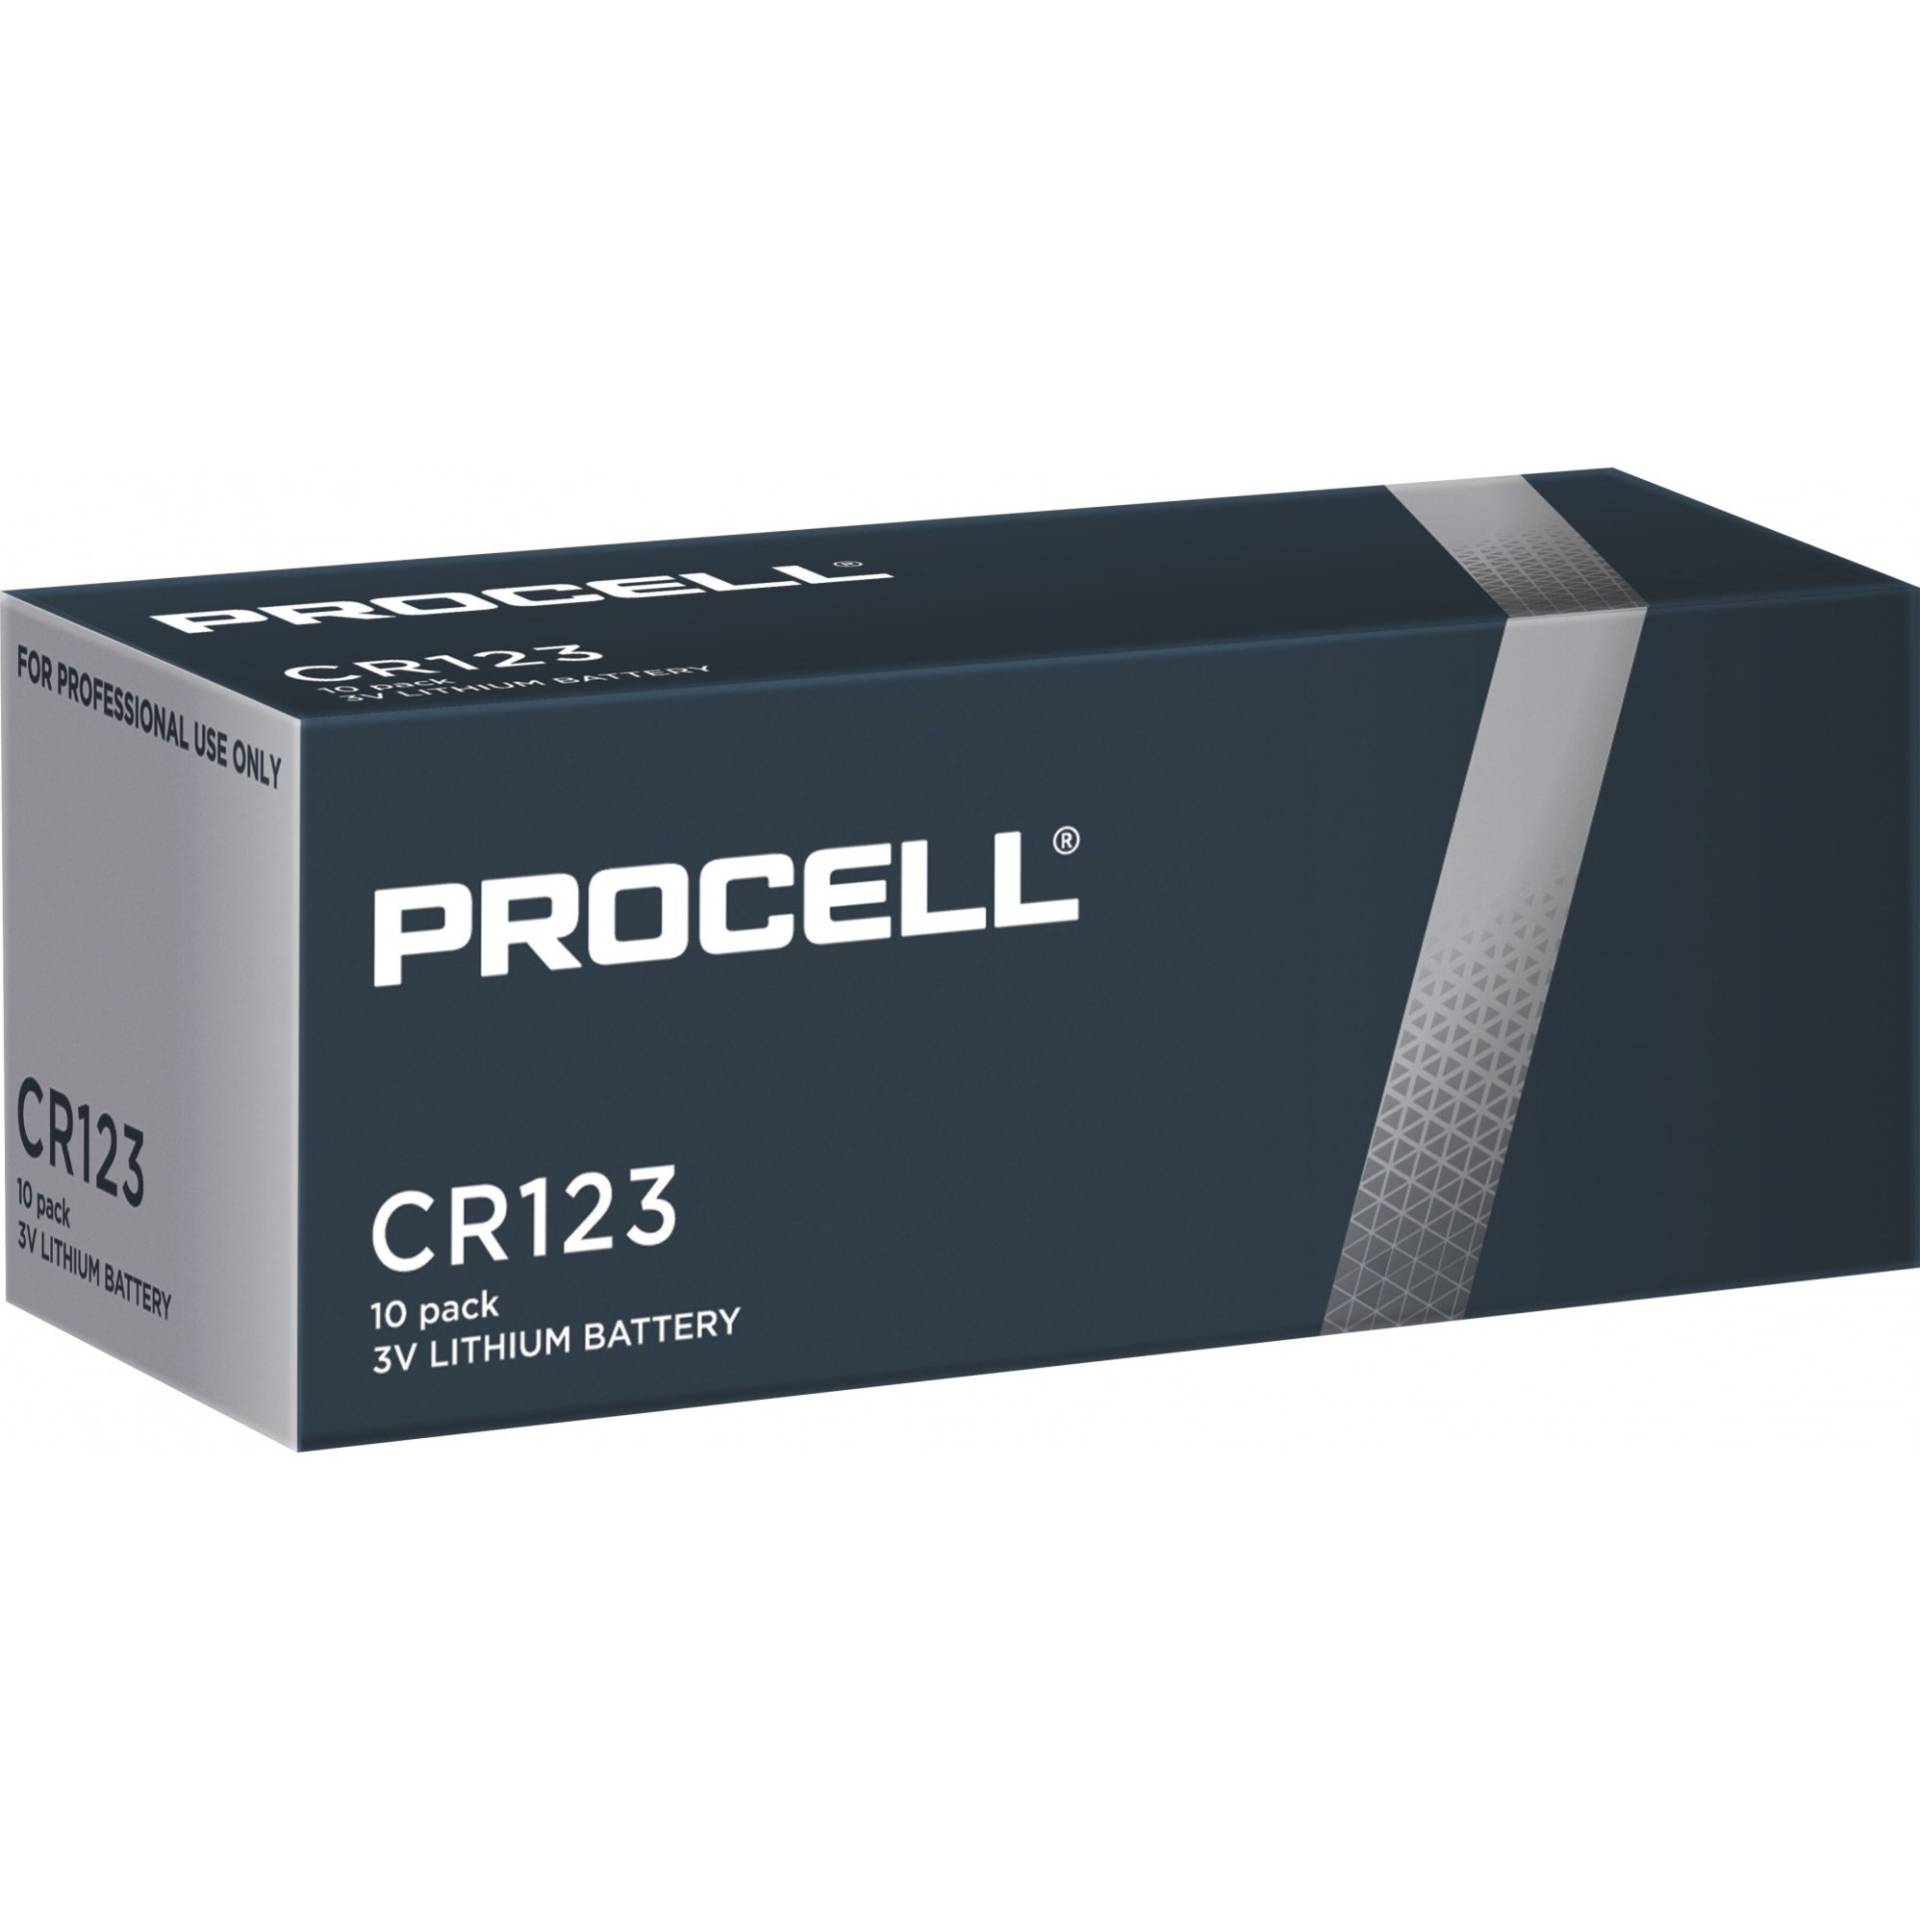 Procell CR123A High Power Lithium Batterie von Duracell